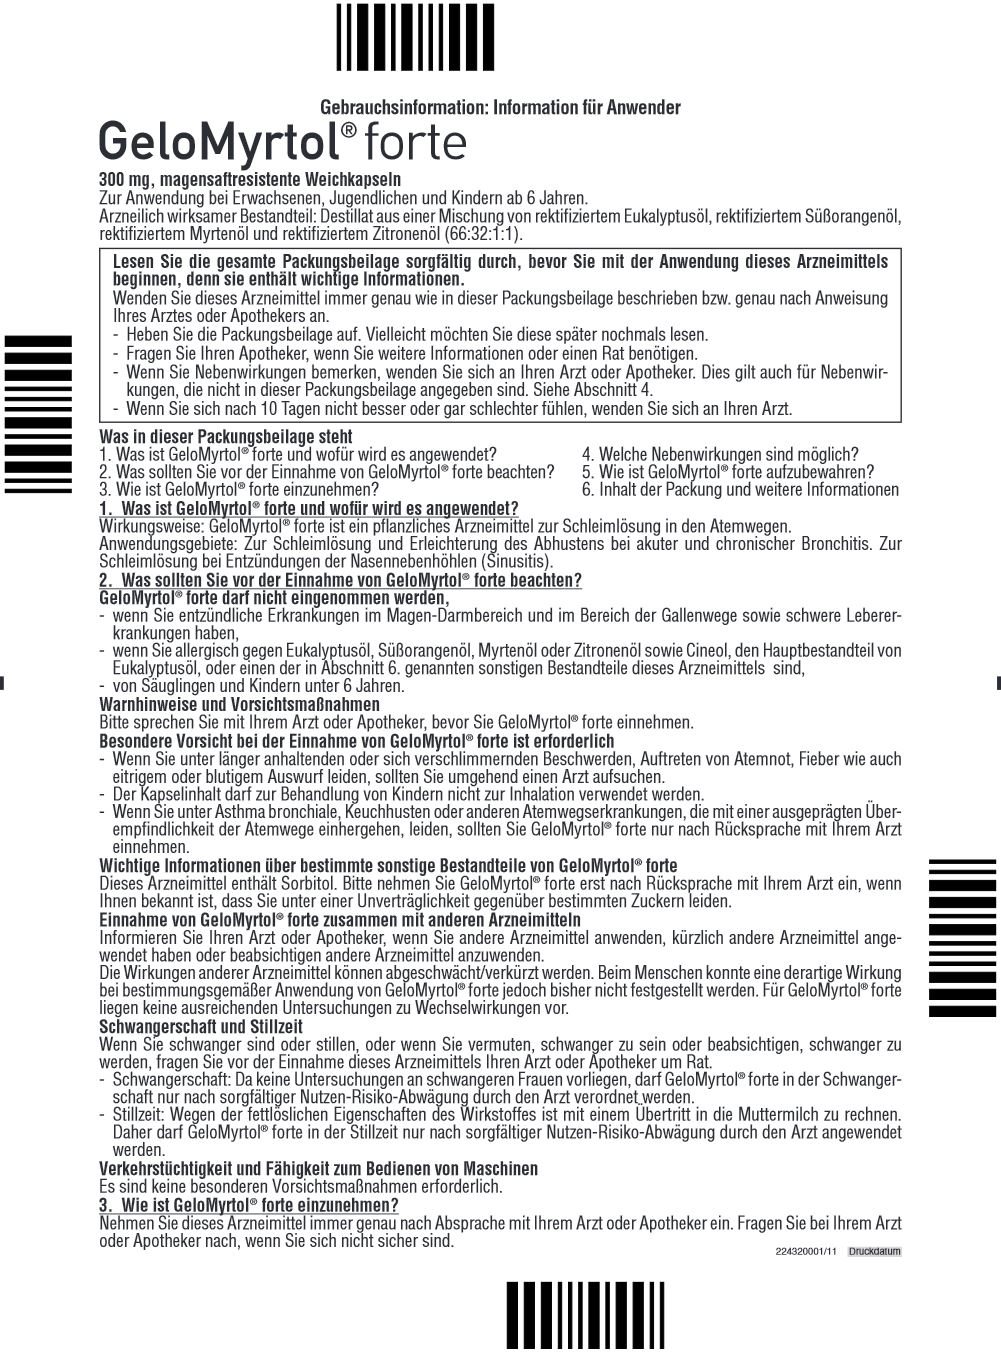 Beipackzetttel (Screenshot http://www.gelomyrtol-forte.de/media//gelomyrtol/_downloads/gf-gi-224320001-11-4k.pdf am 04.08.2014)